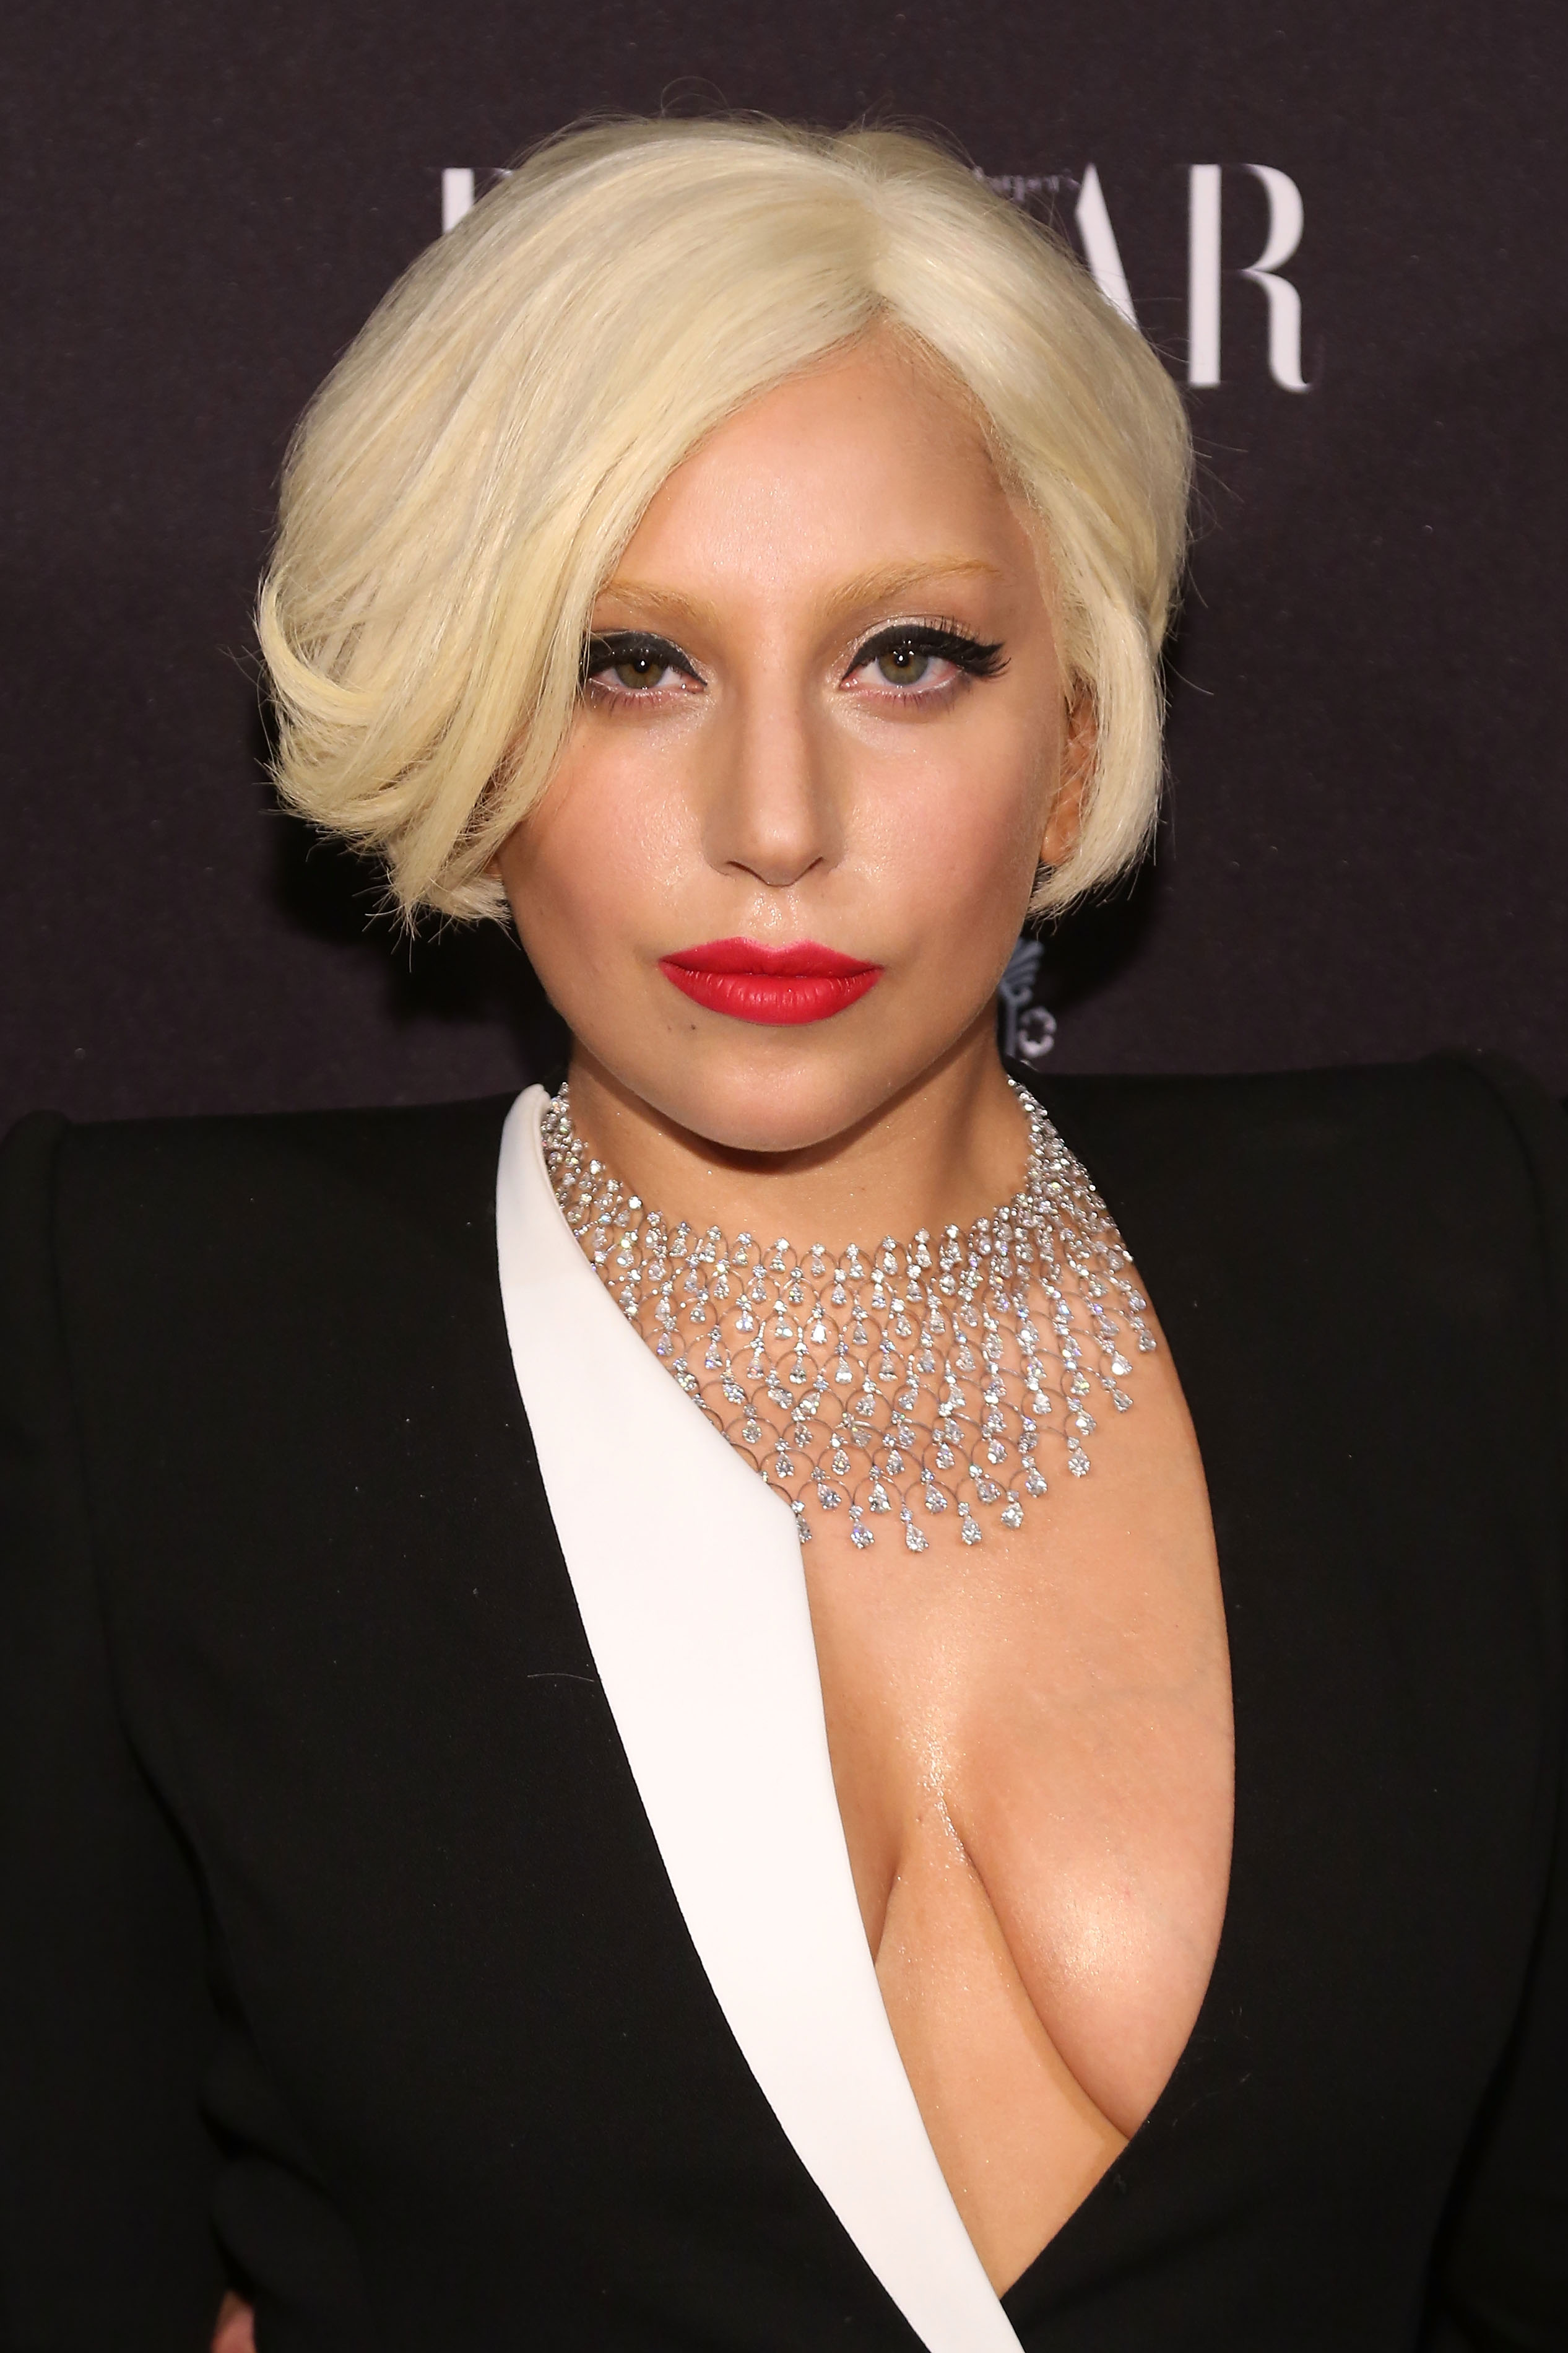 Celebrities and Cocaine Lady Gaga, Lindsay Lohan, and More image